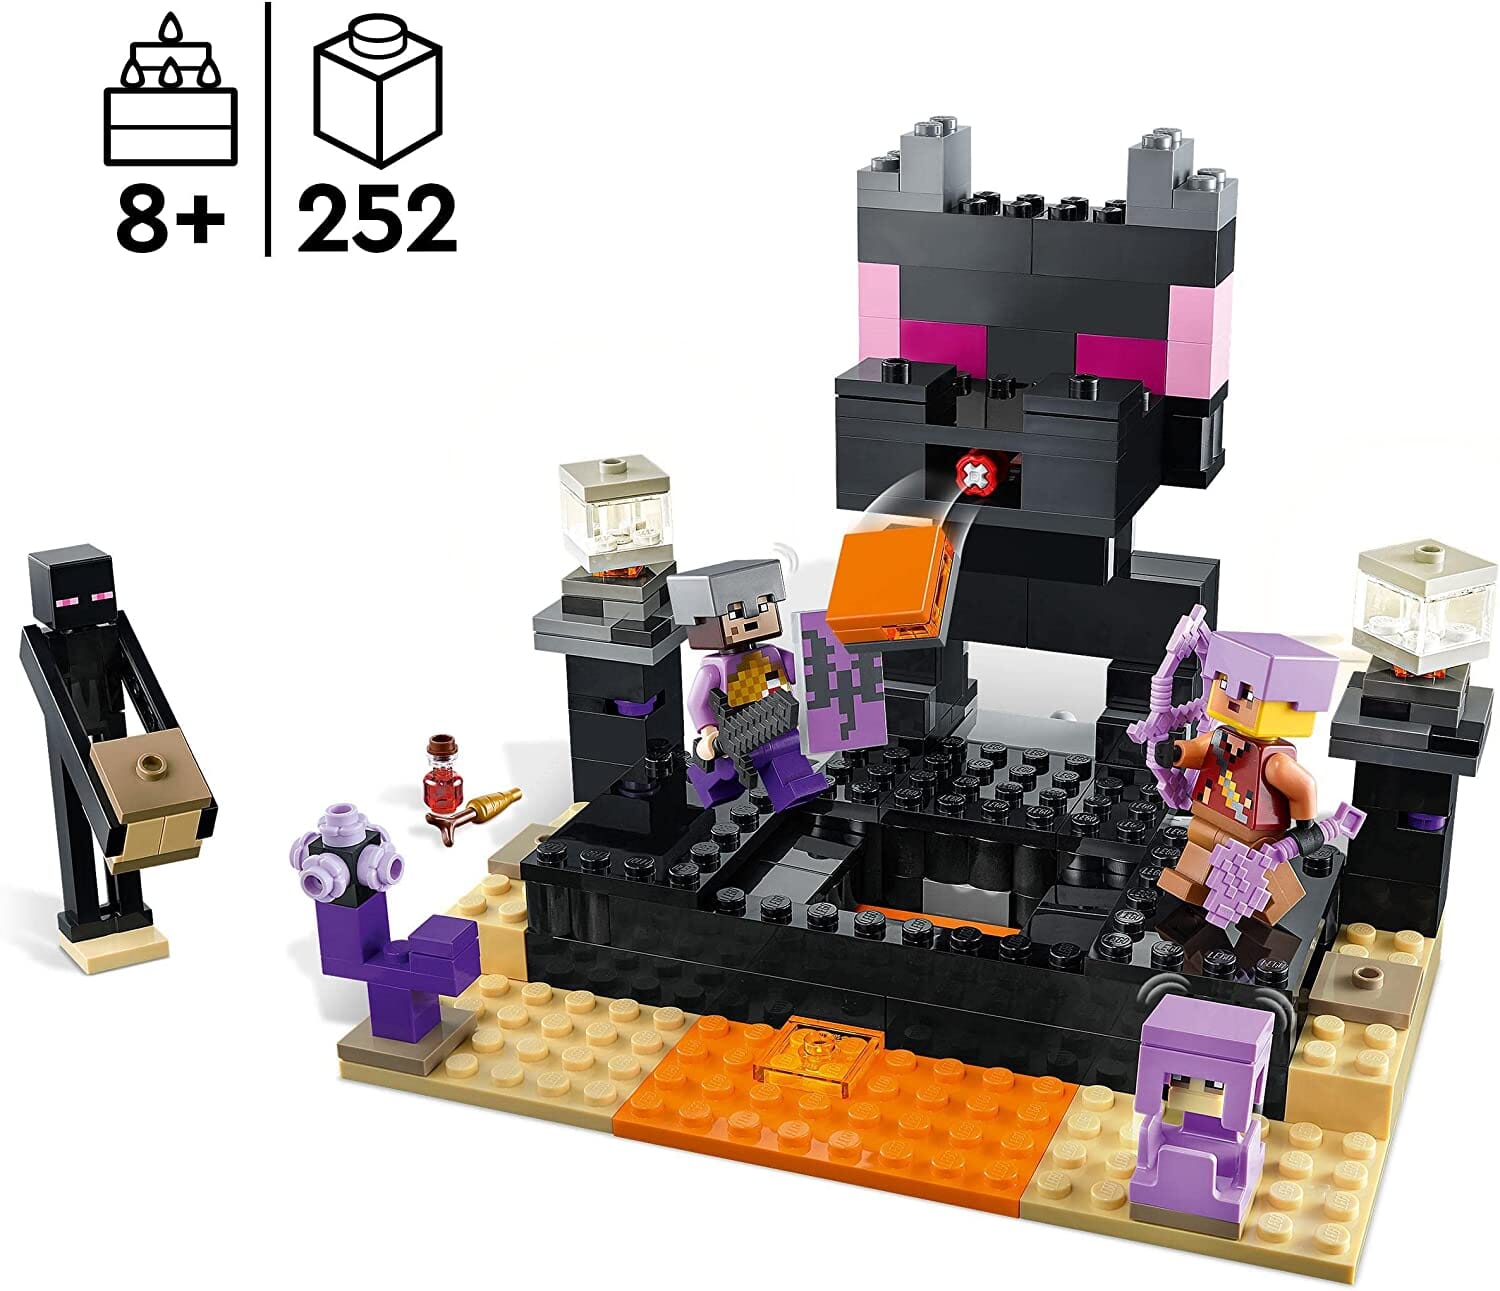 LEGO 21242 Minecraft The End Arena toysvaldichiana.it 